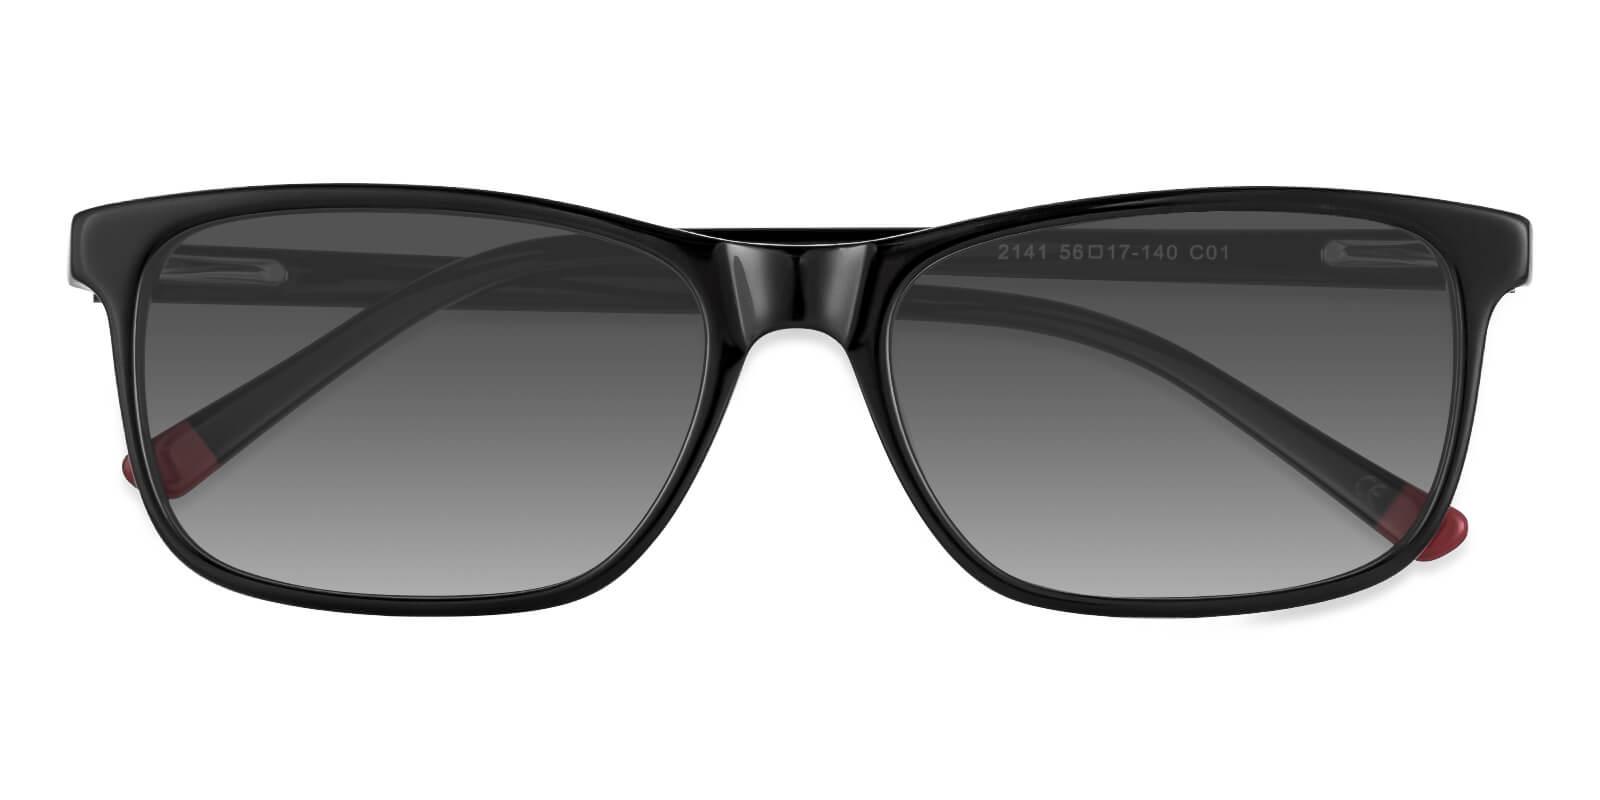 Candela Pattern Acetate SpringHinges , UniversalBridgeFit , Sunglasses Frames from ABBE Glasses